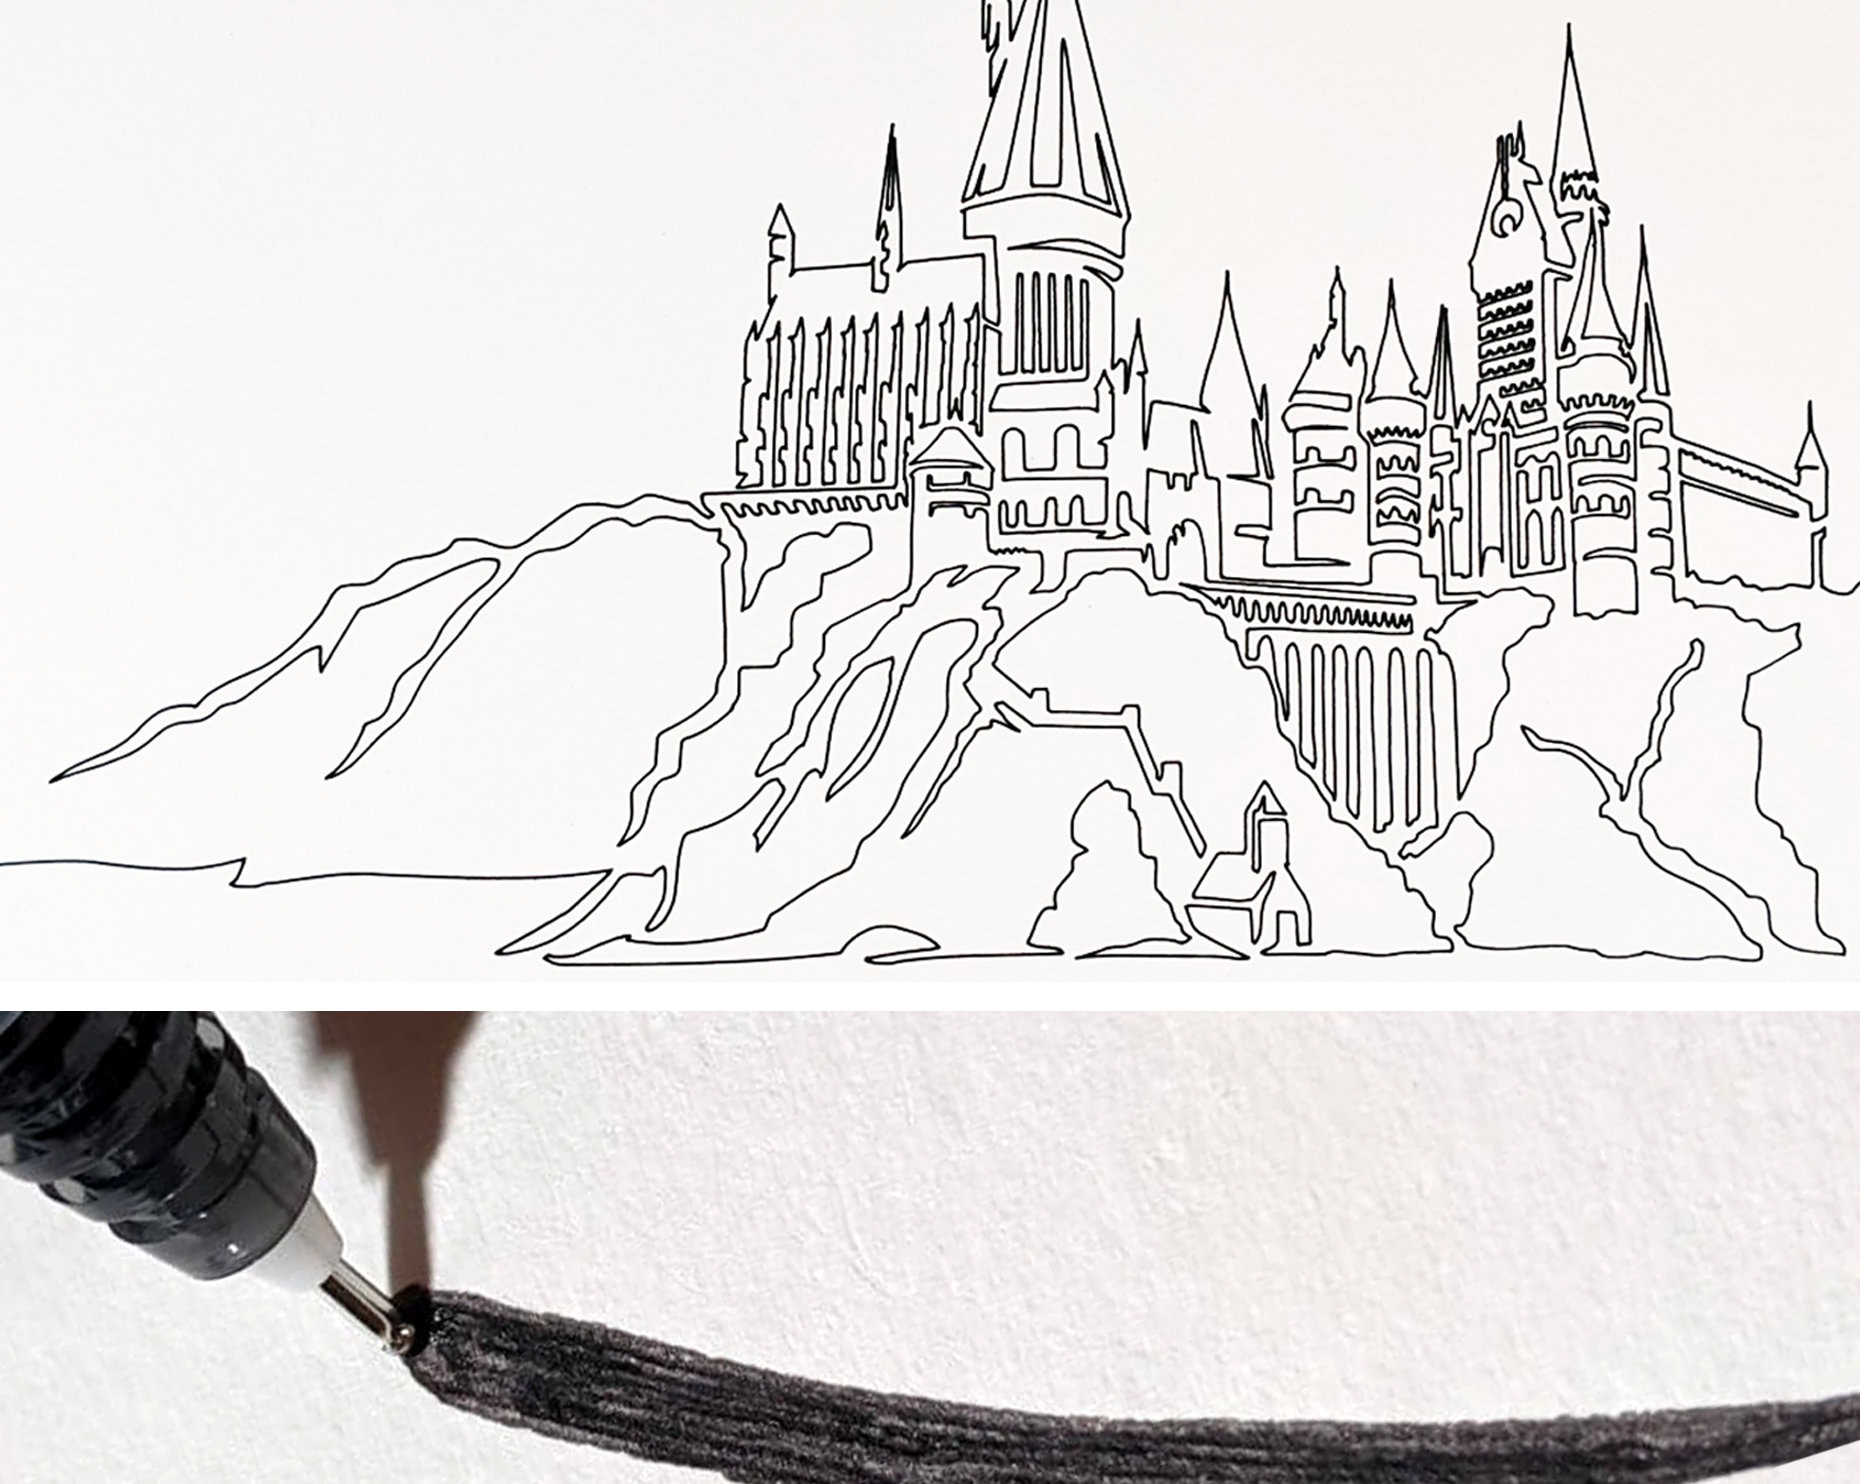 Hogwarts-castle by paooolino on DeviantArt